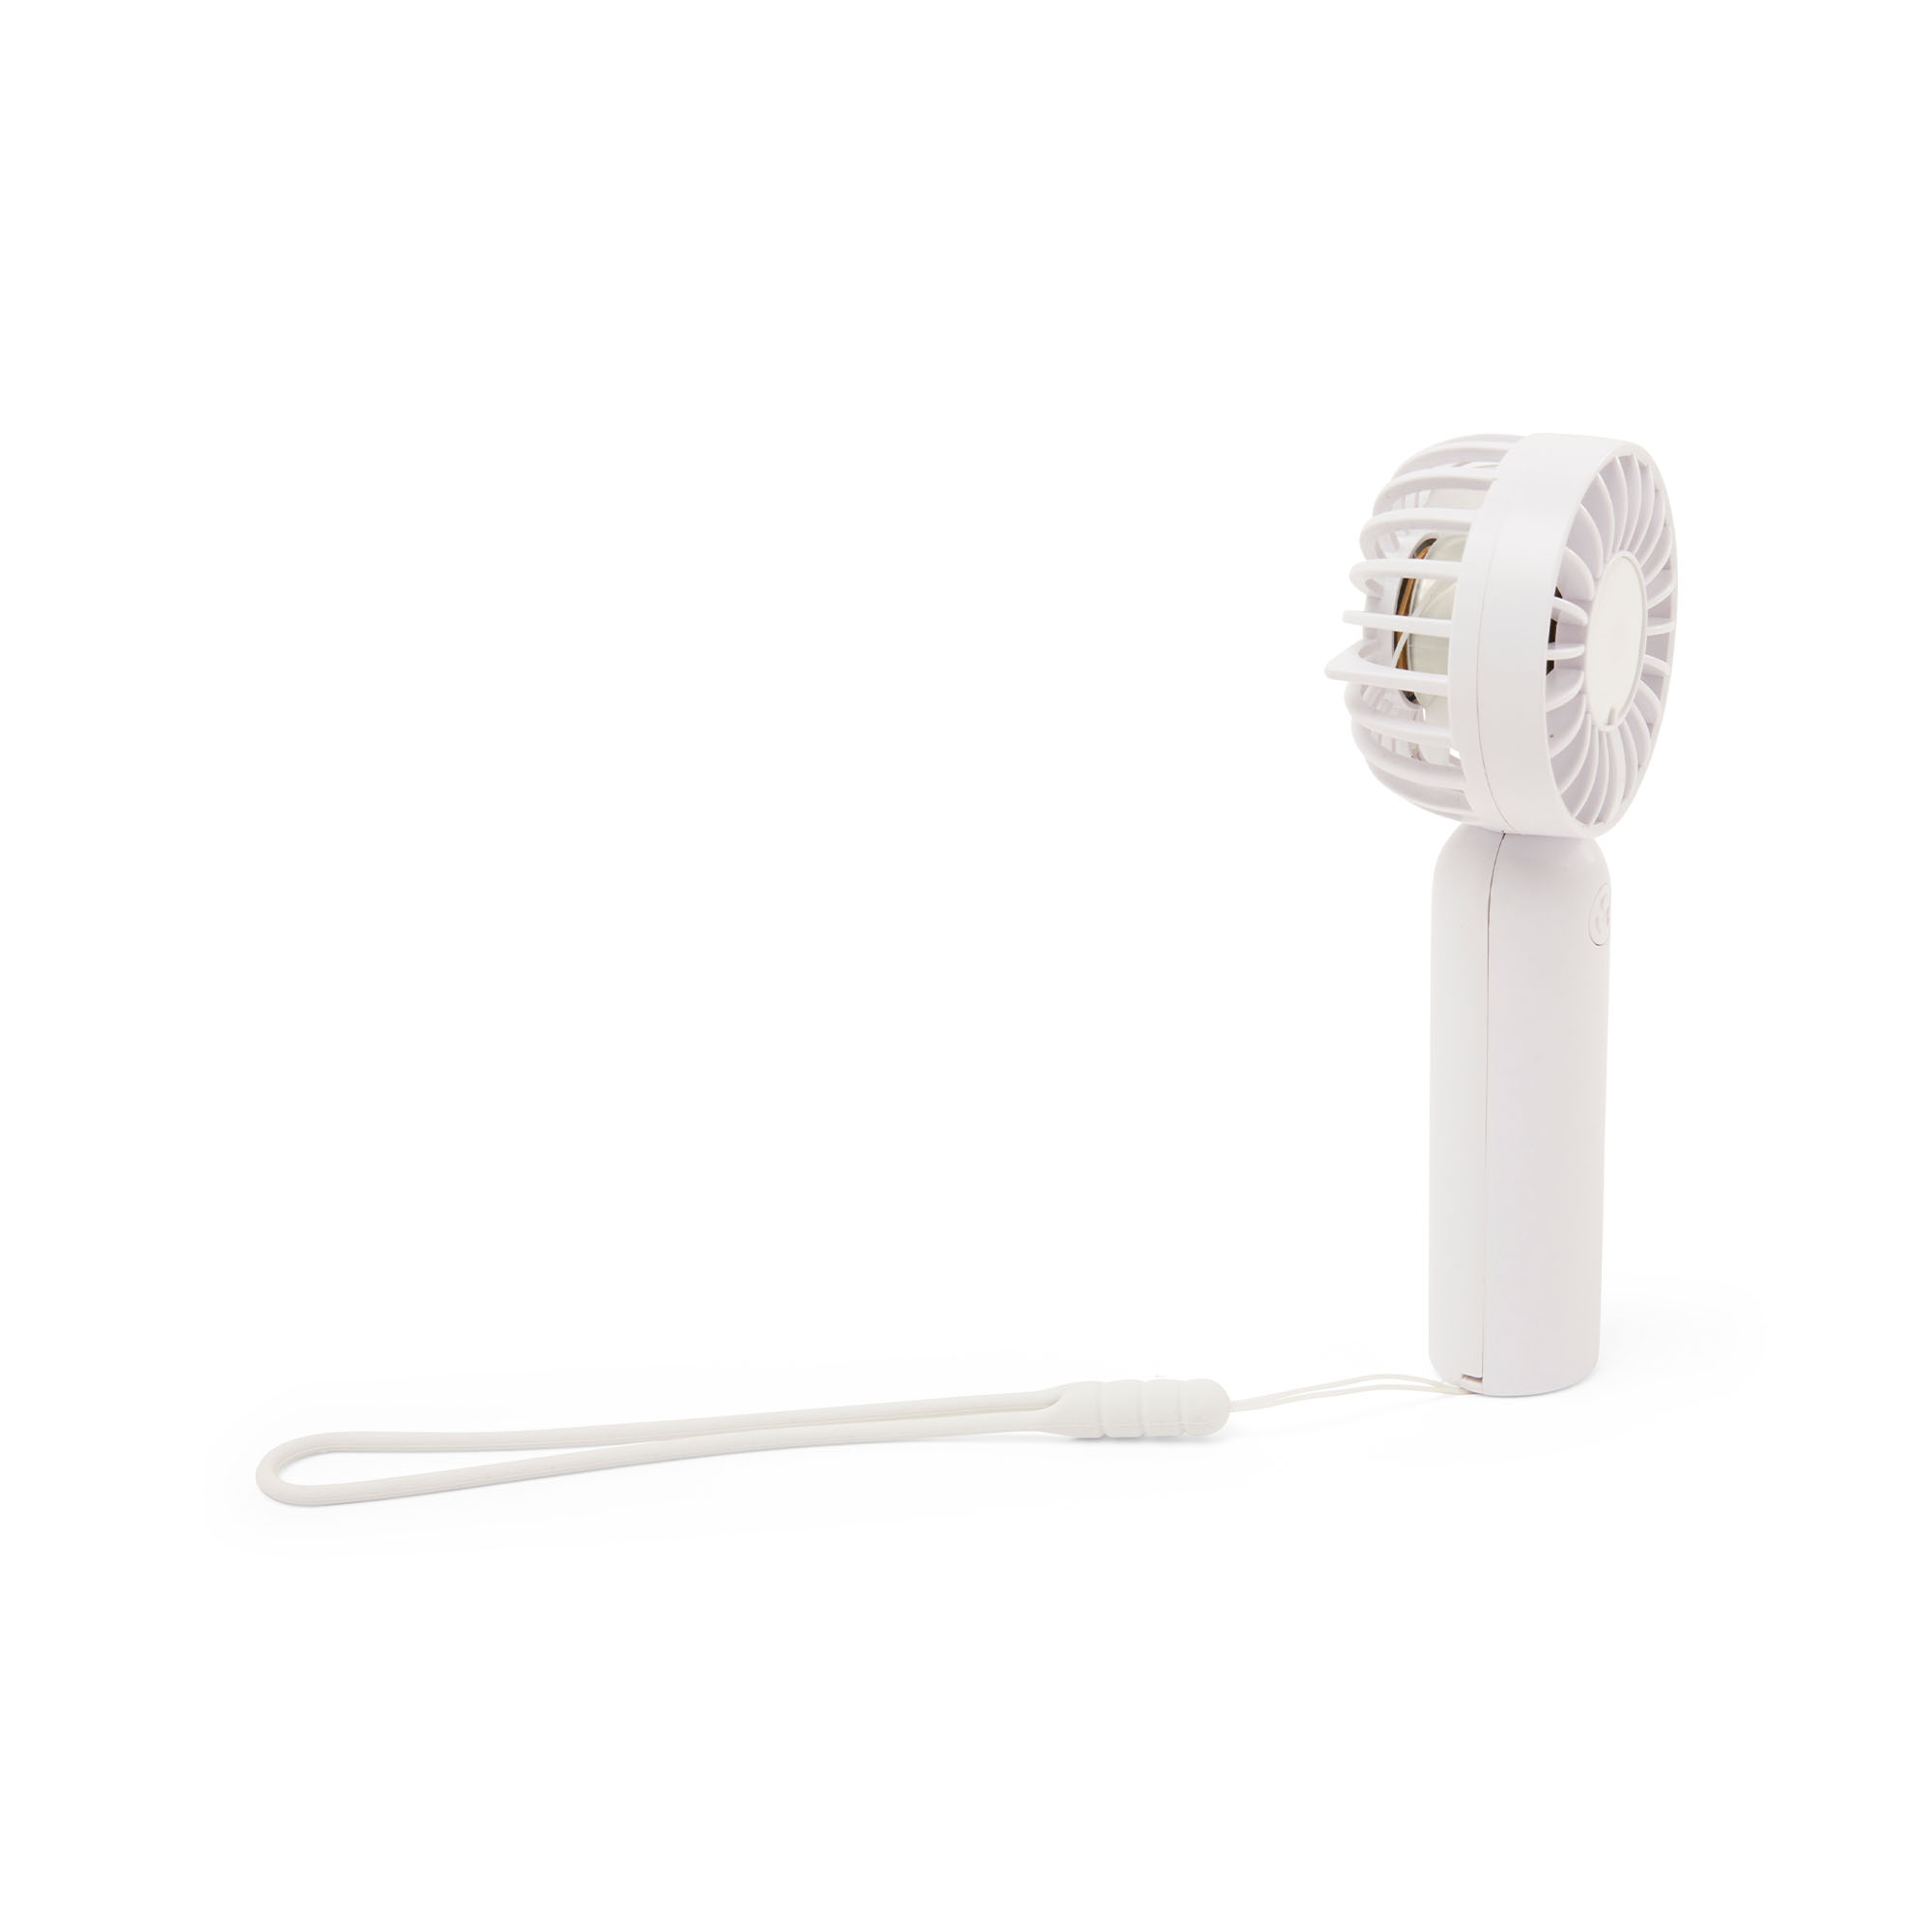 Mini Ventilatore Portatile Ricaricabile, Bianco, , large